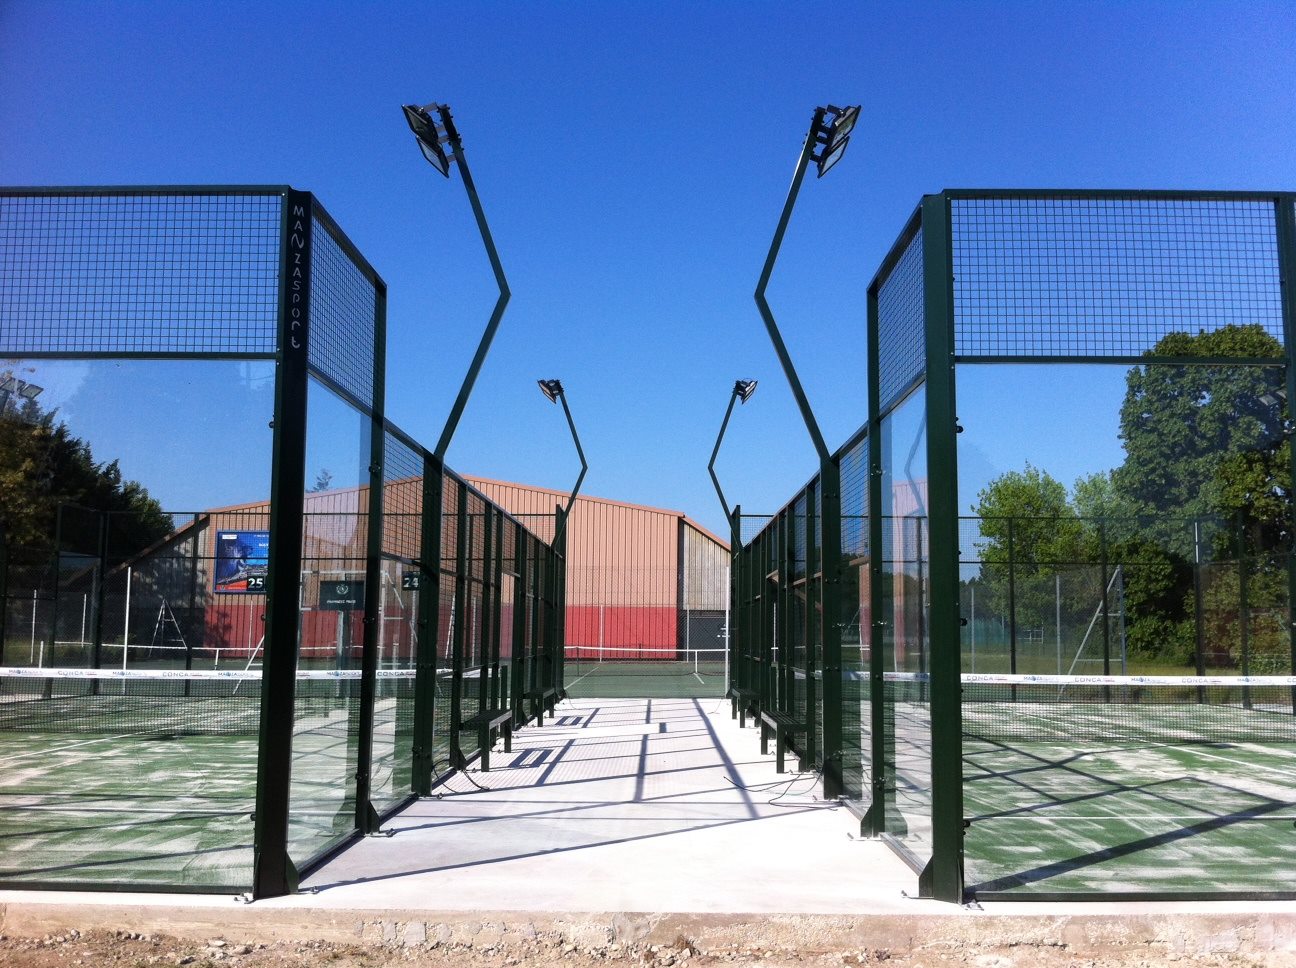 Tennis Club de Lyon oferece quadras de paddle 2